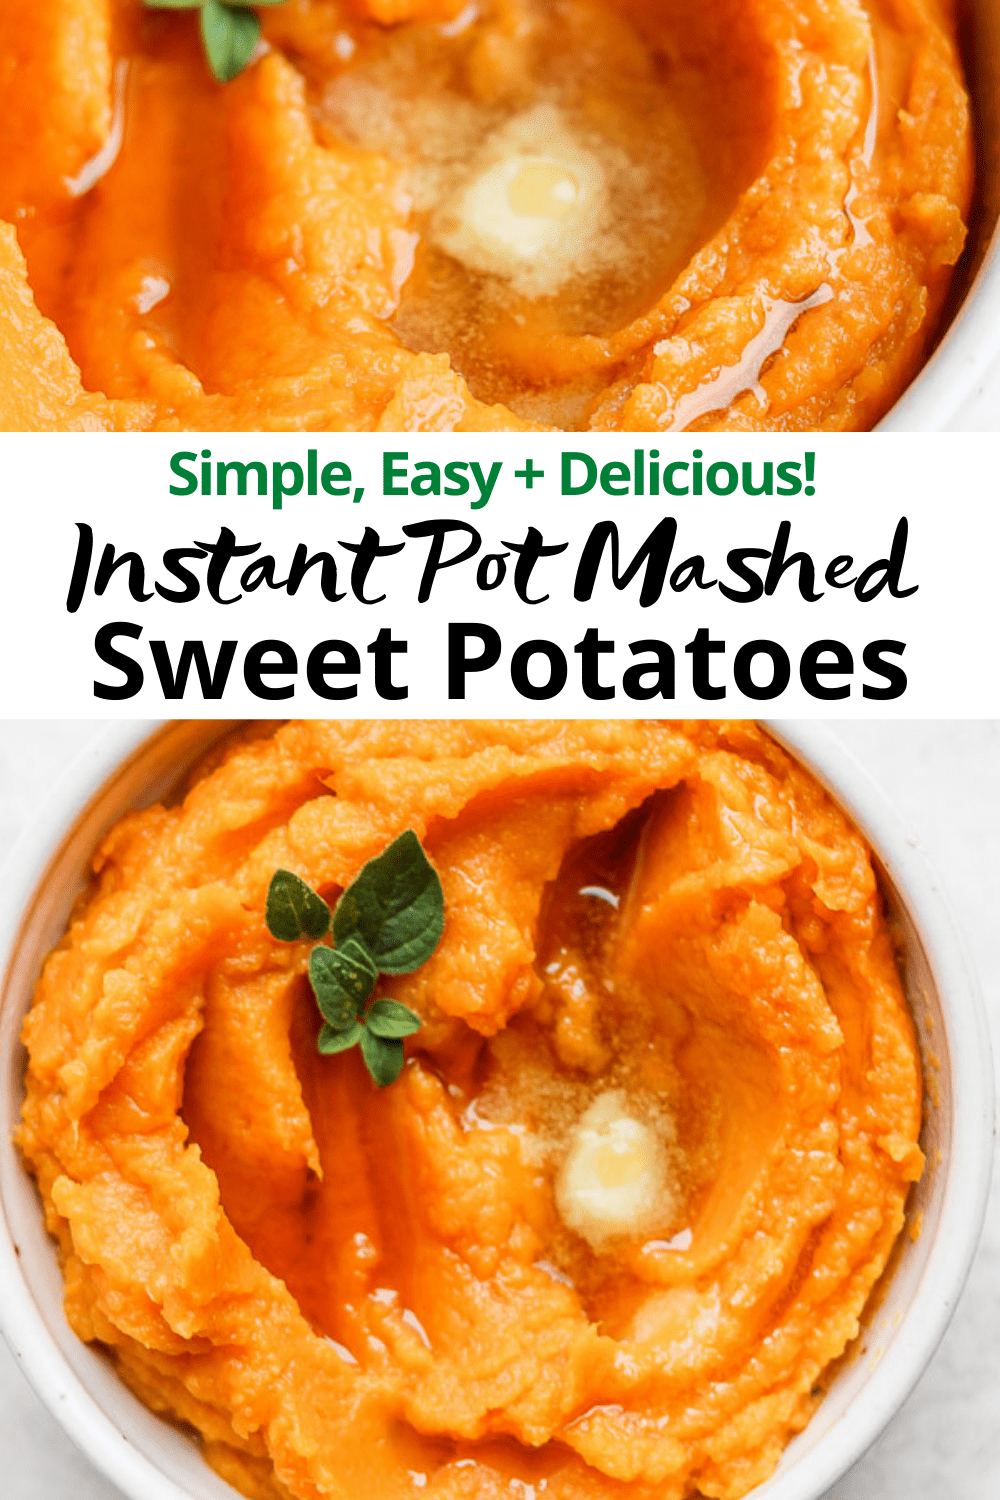 Pinterest image for Instant Pot mashed sweet potatoes.